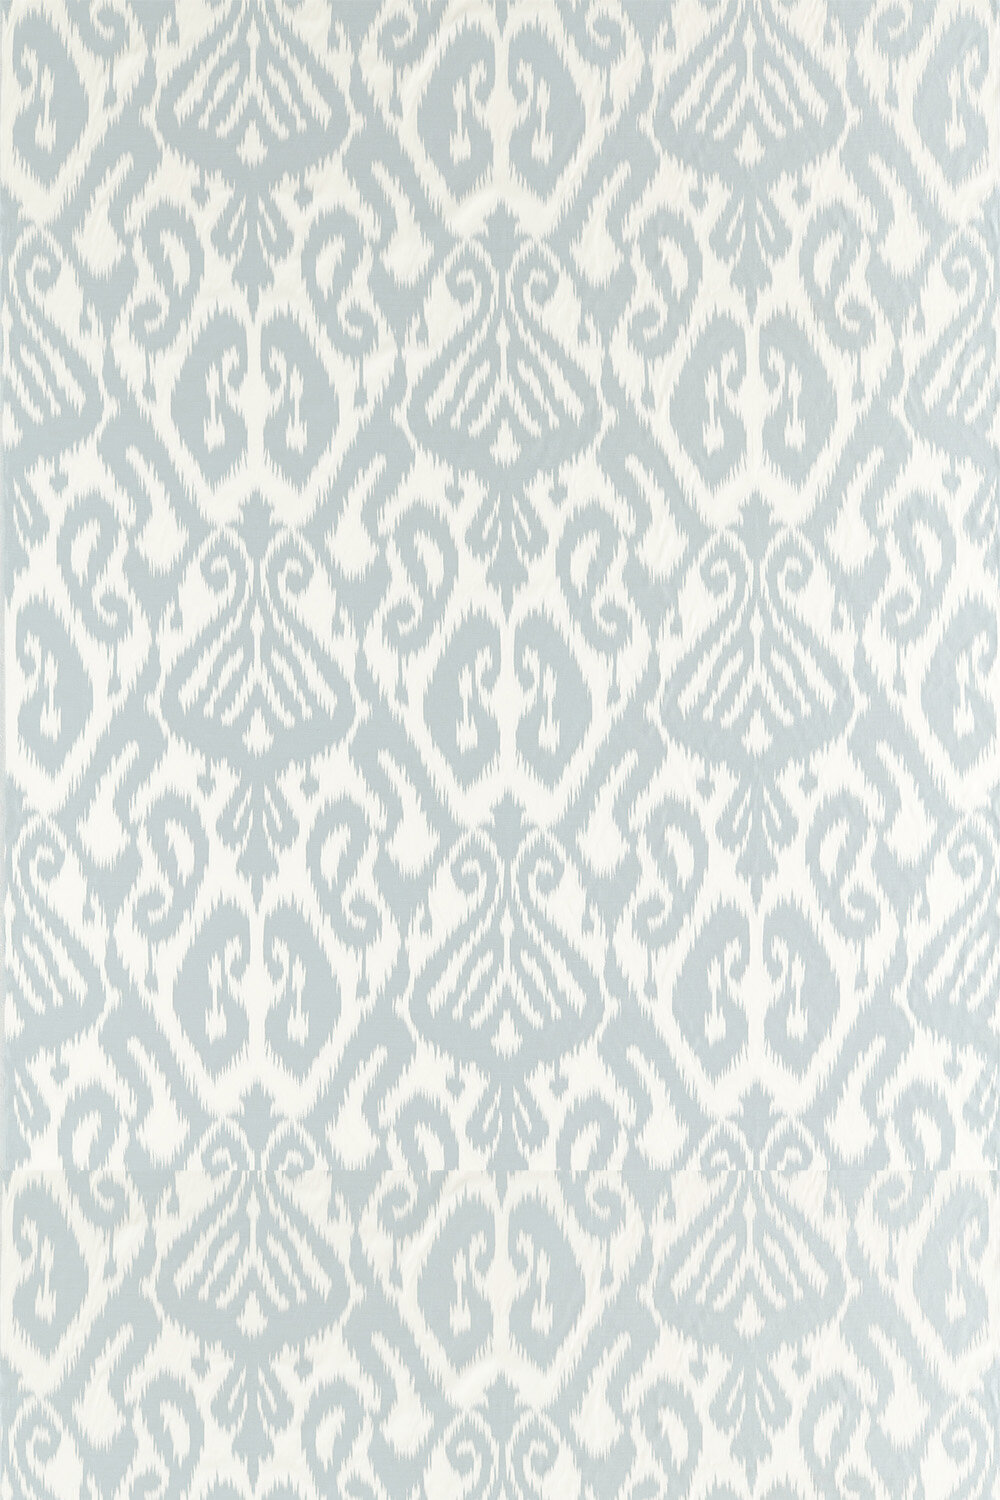 Kasuri Weave Fabric - Dove - by Sanderson